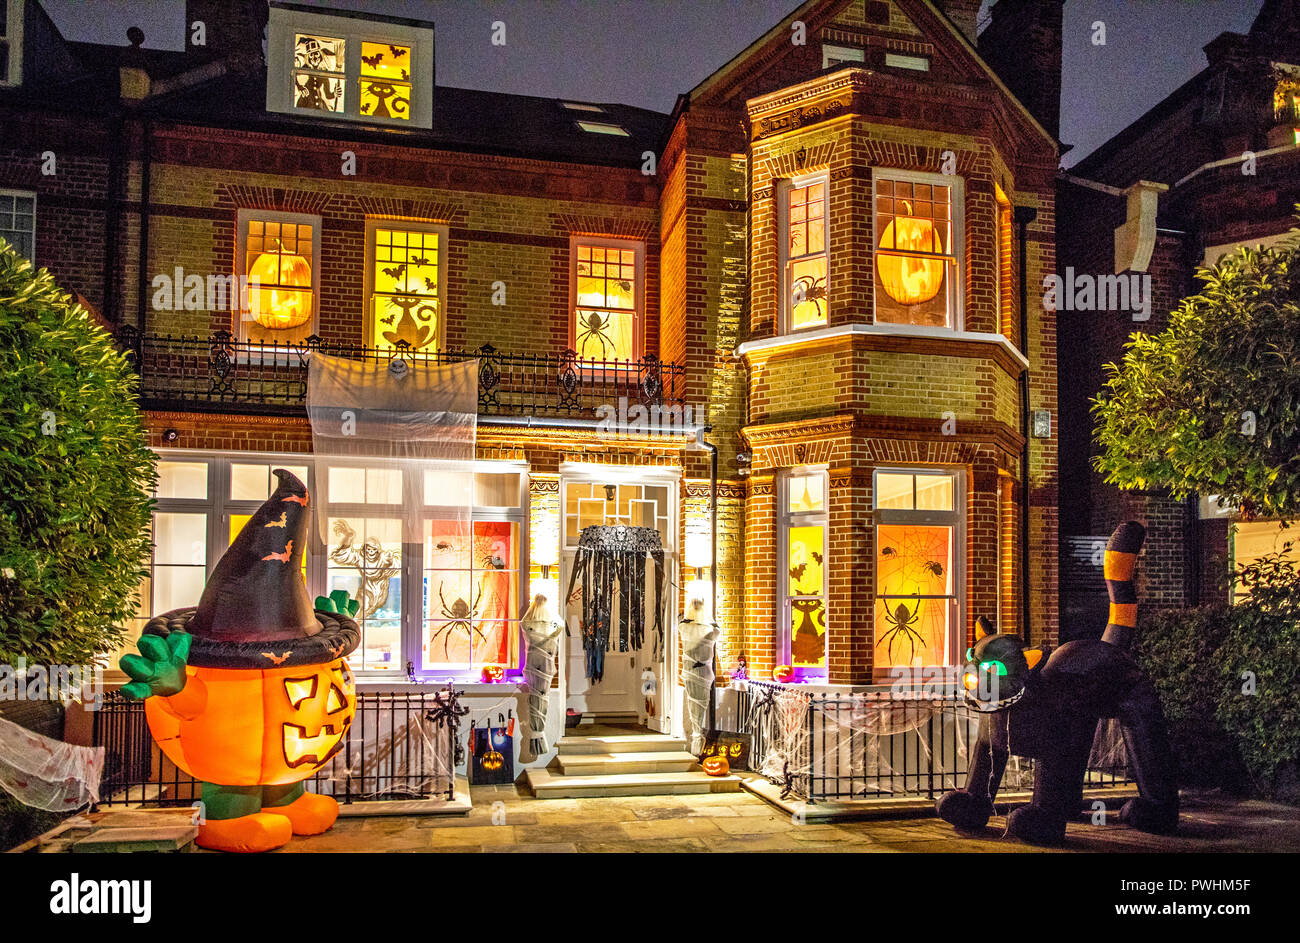 Haunted Halloween House Wandsworth Common London UK Stock Photo